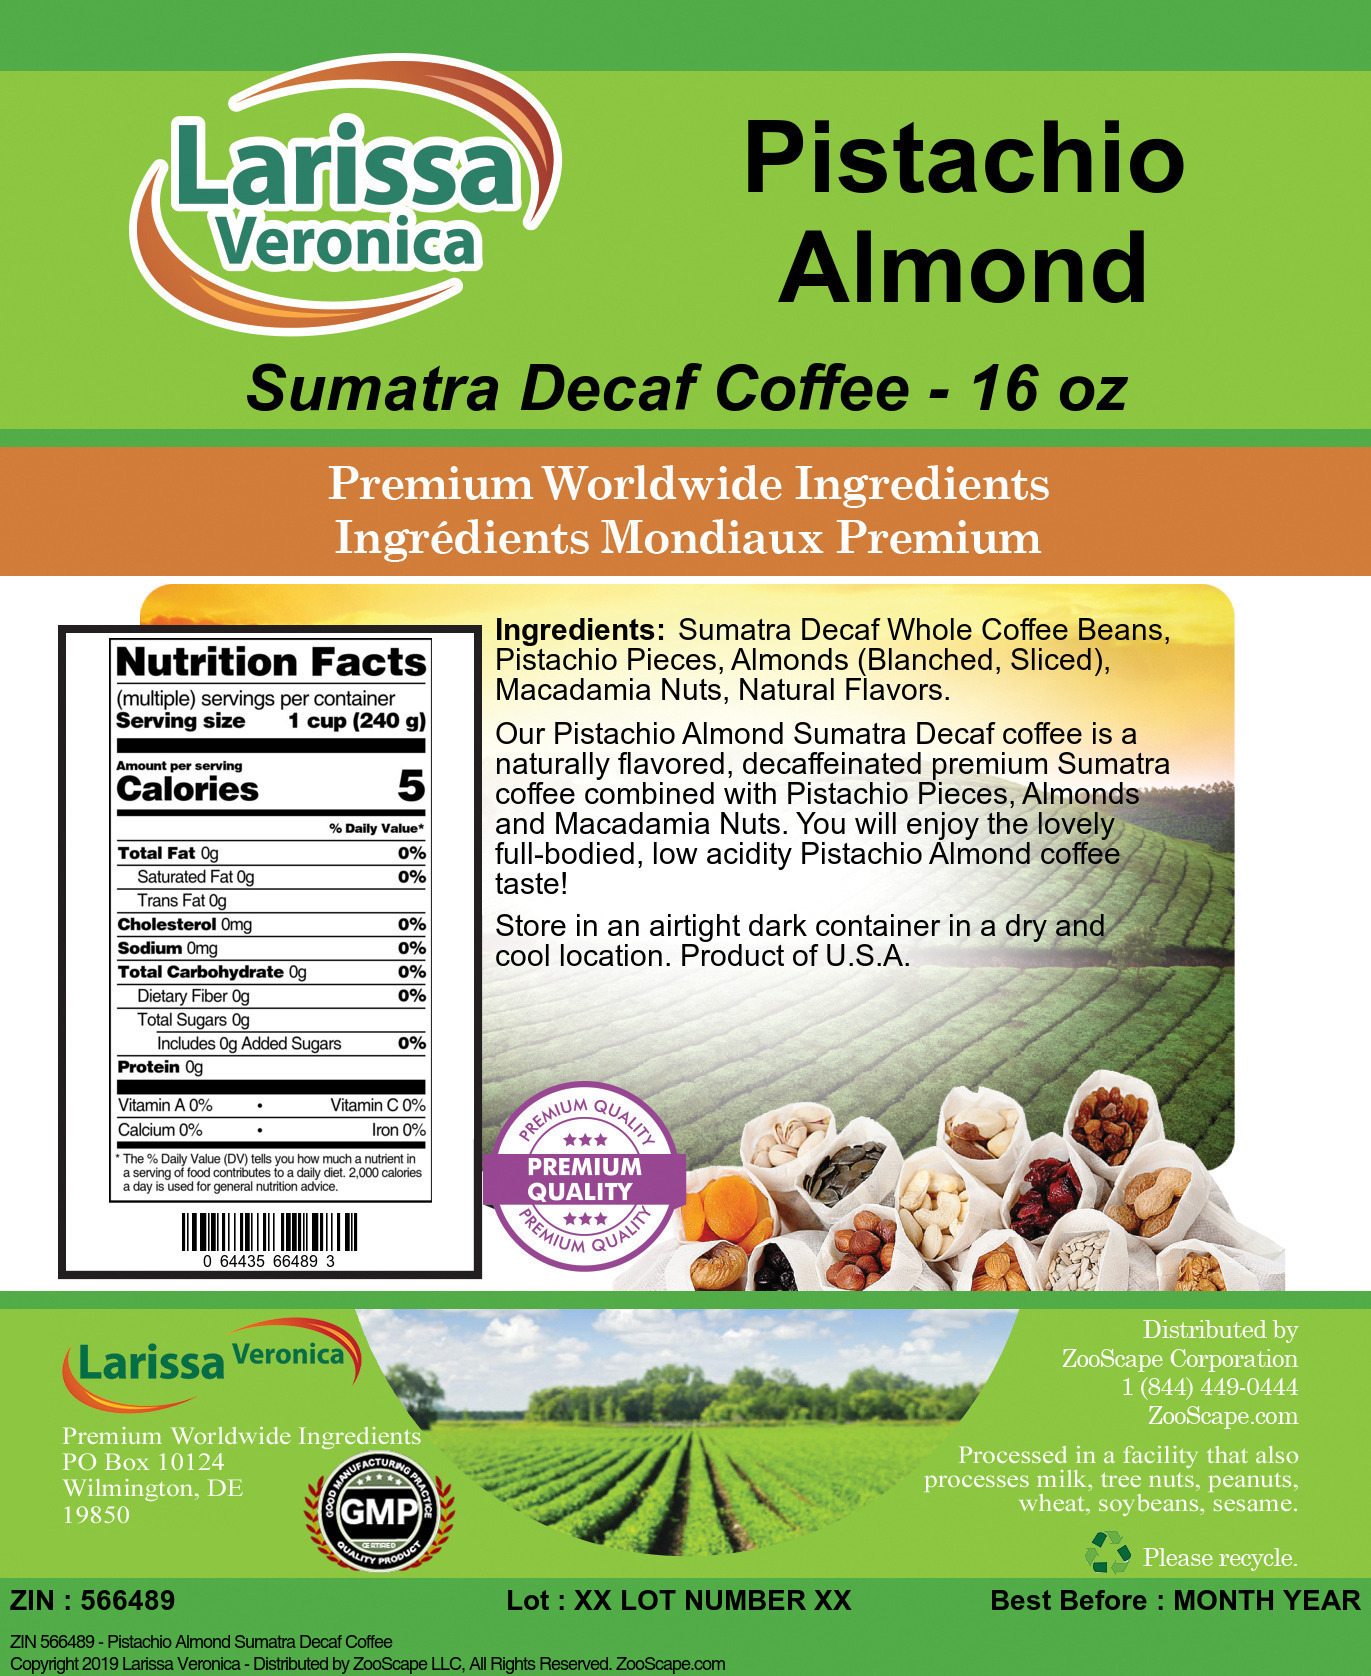 Pistachio Almond Sumatra Decaf Coffee - Label